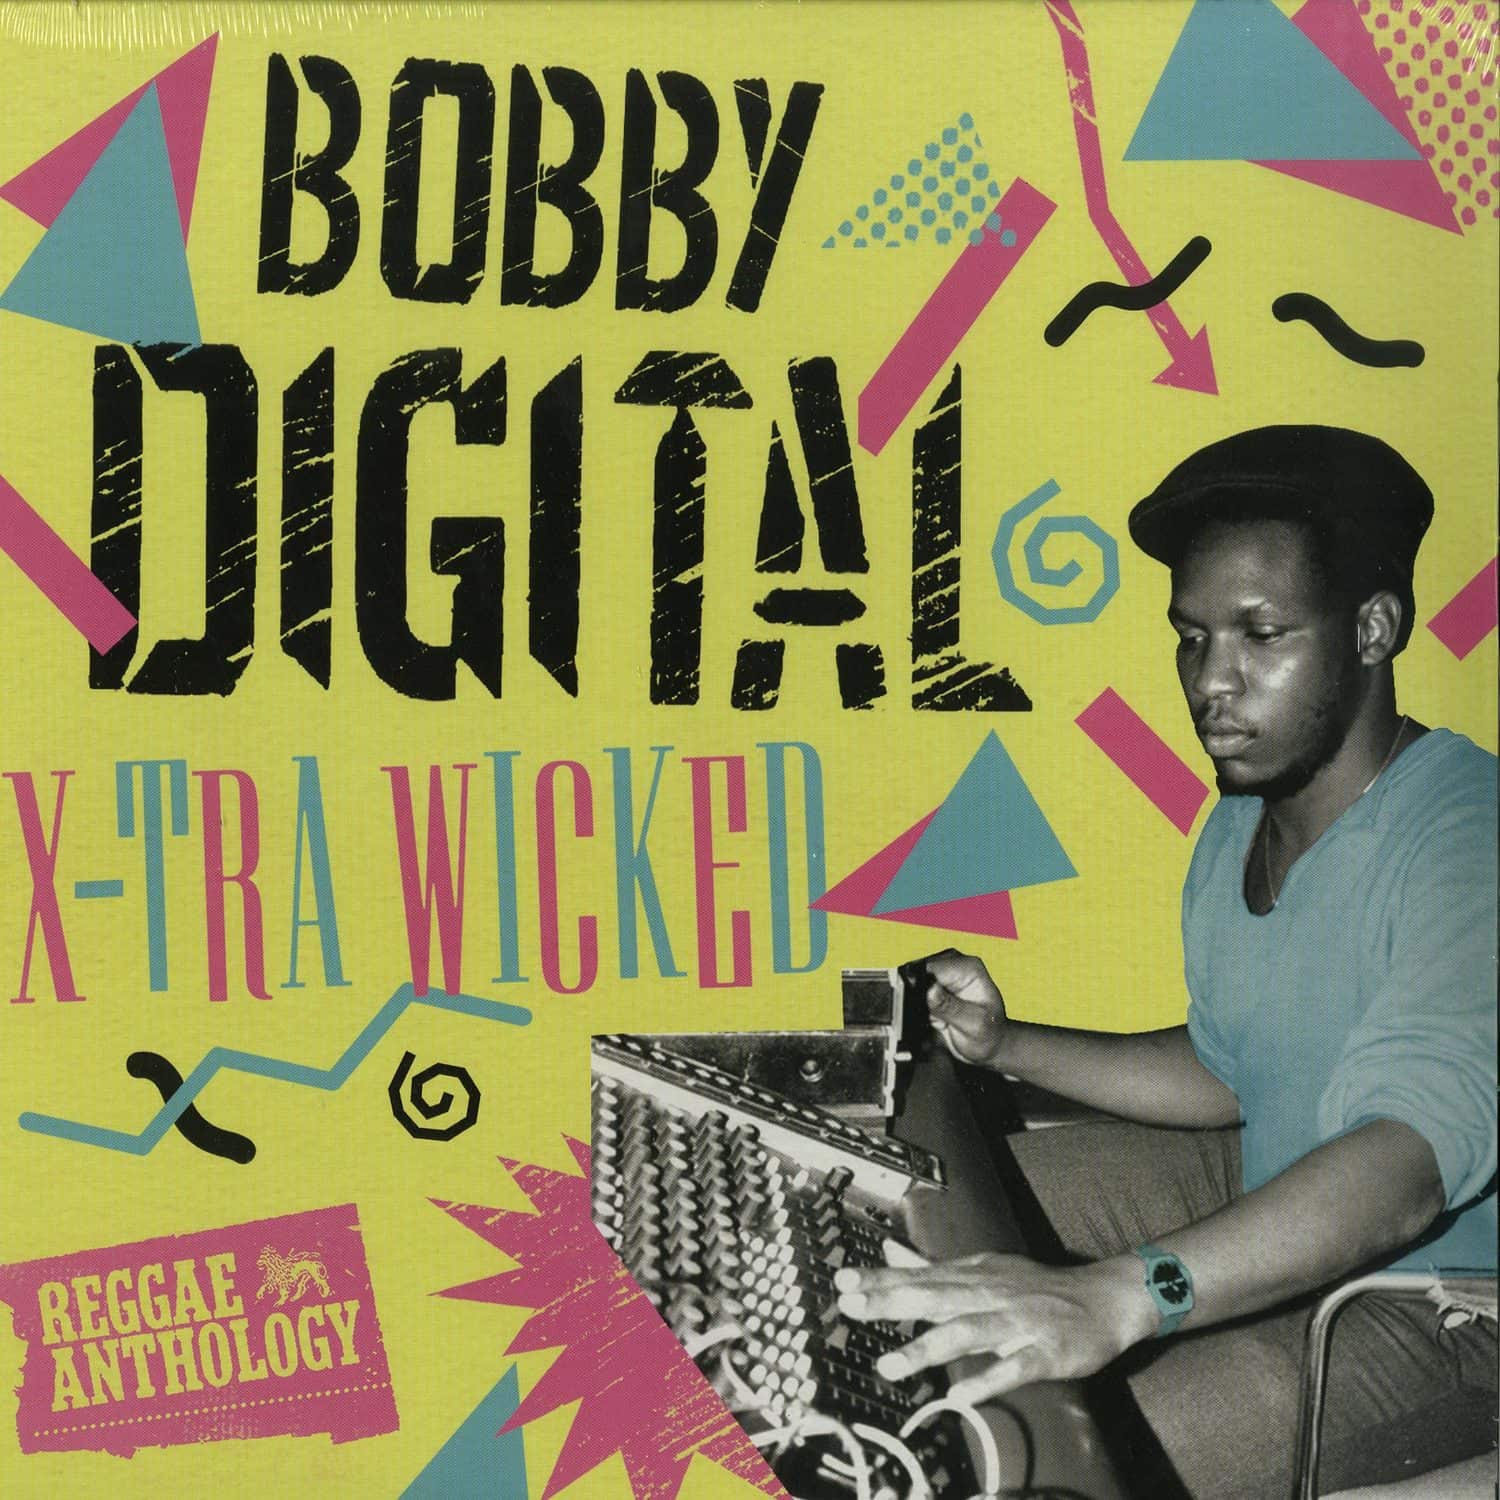 Bobby Digital - X-TRA WICKED - REGGAE ANTHOLOGY 